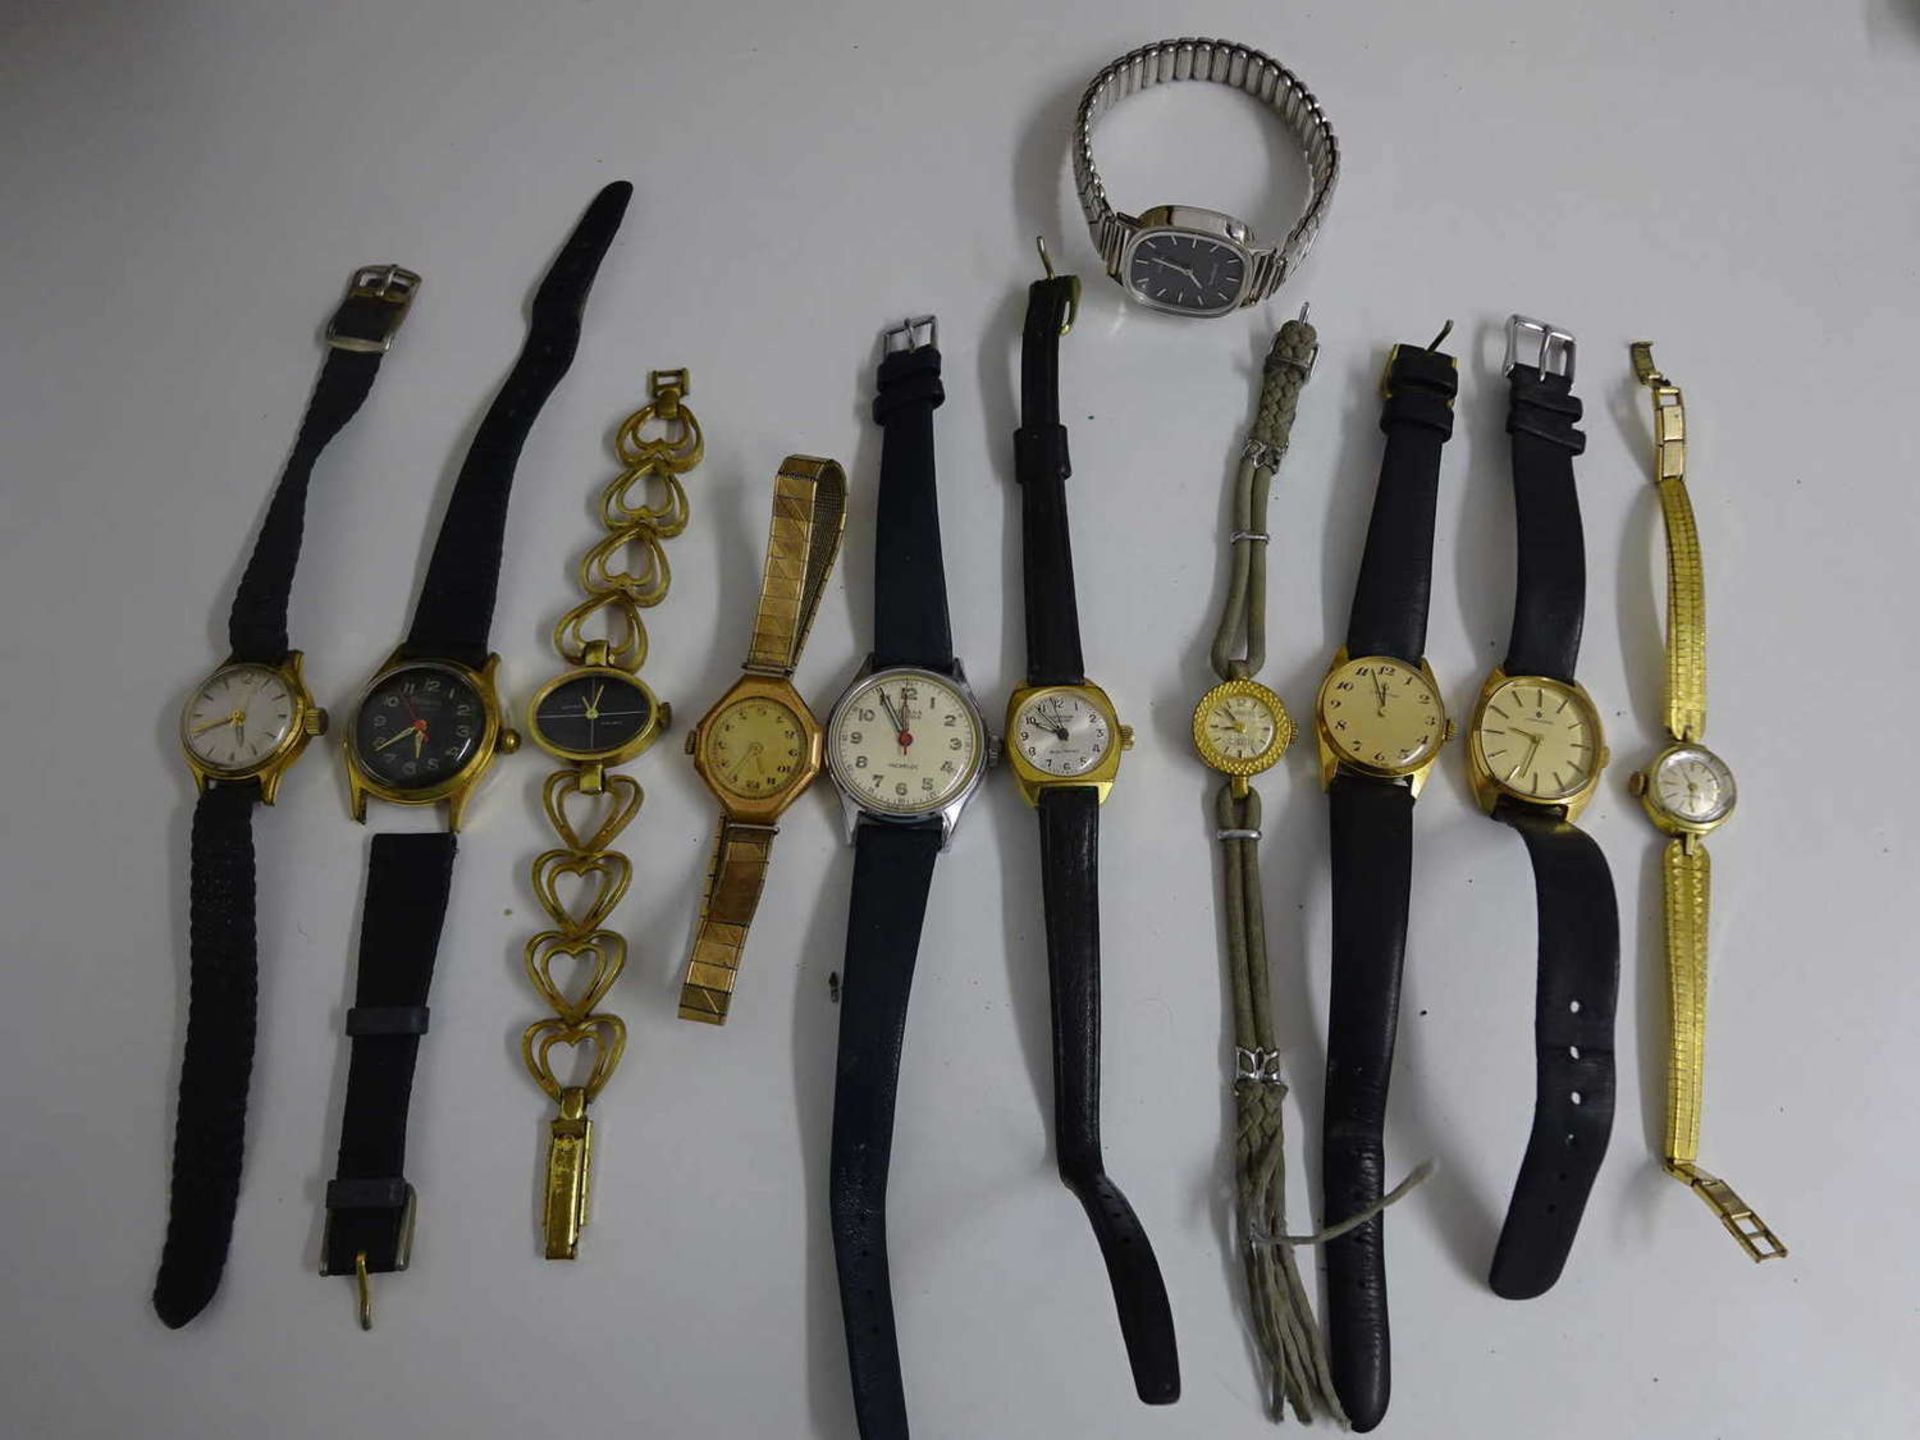 Lot verschiedene Bastleruhren, meist Damenarmbanduhren, dabei auch ältere. Insgesamt 11 Stück. Bitte